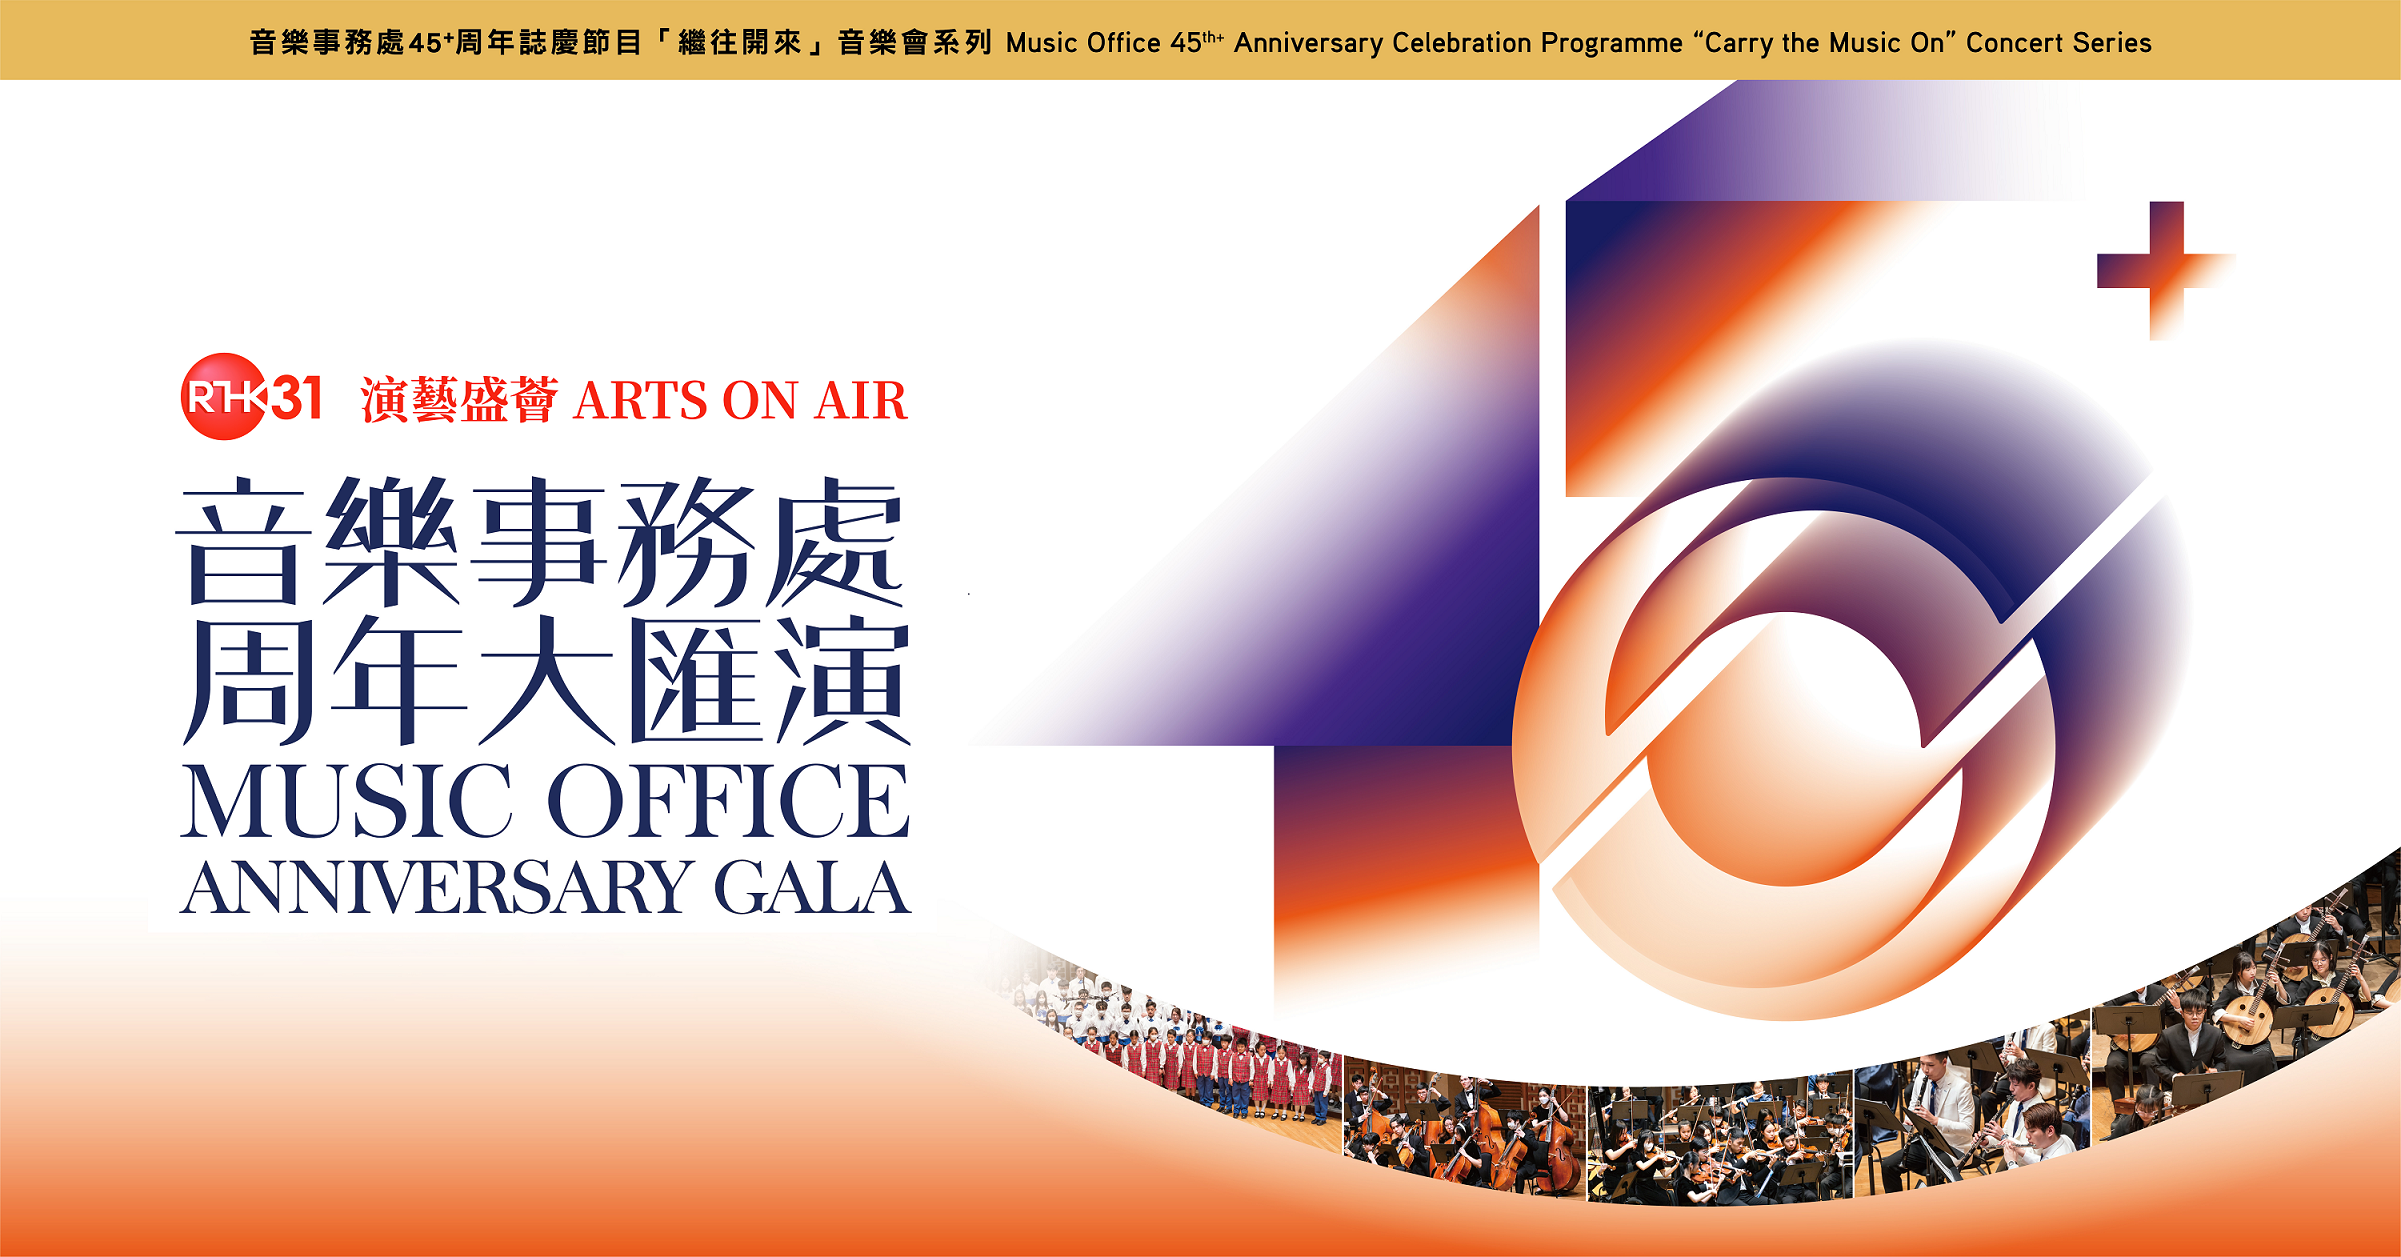 Music Office 45th+ Anniversary Gala - RTHK TV 31's Arts on Air